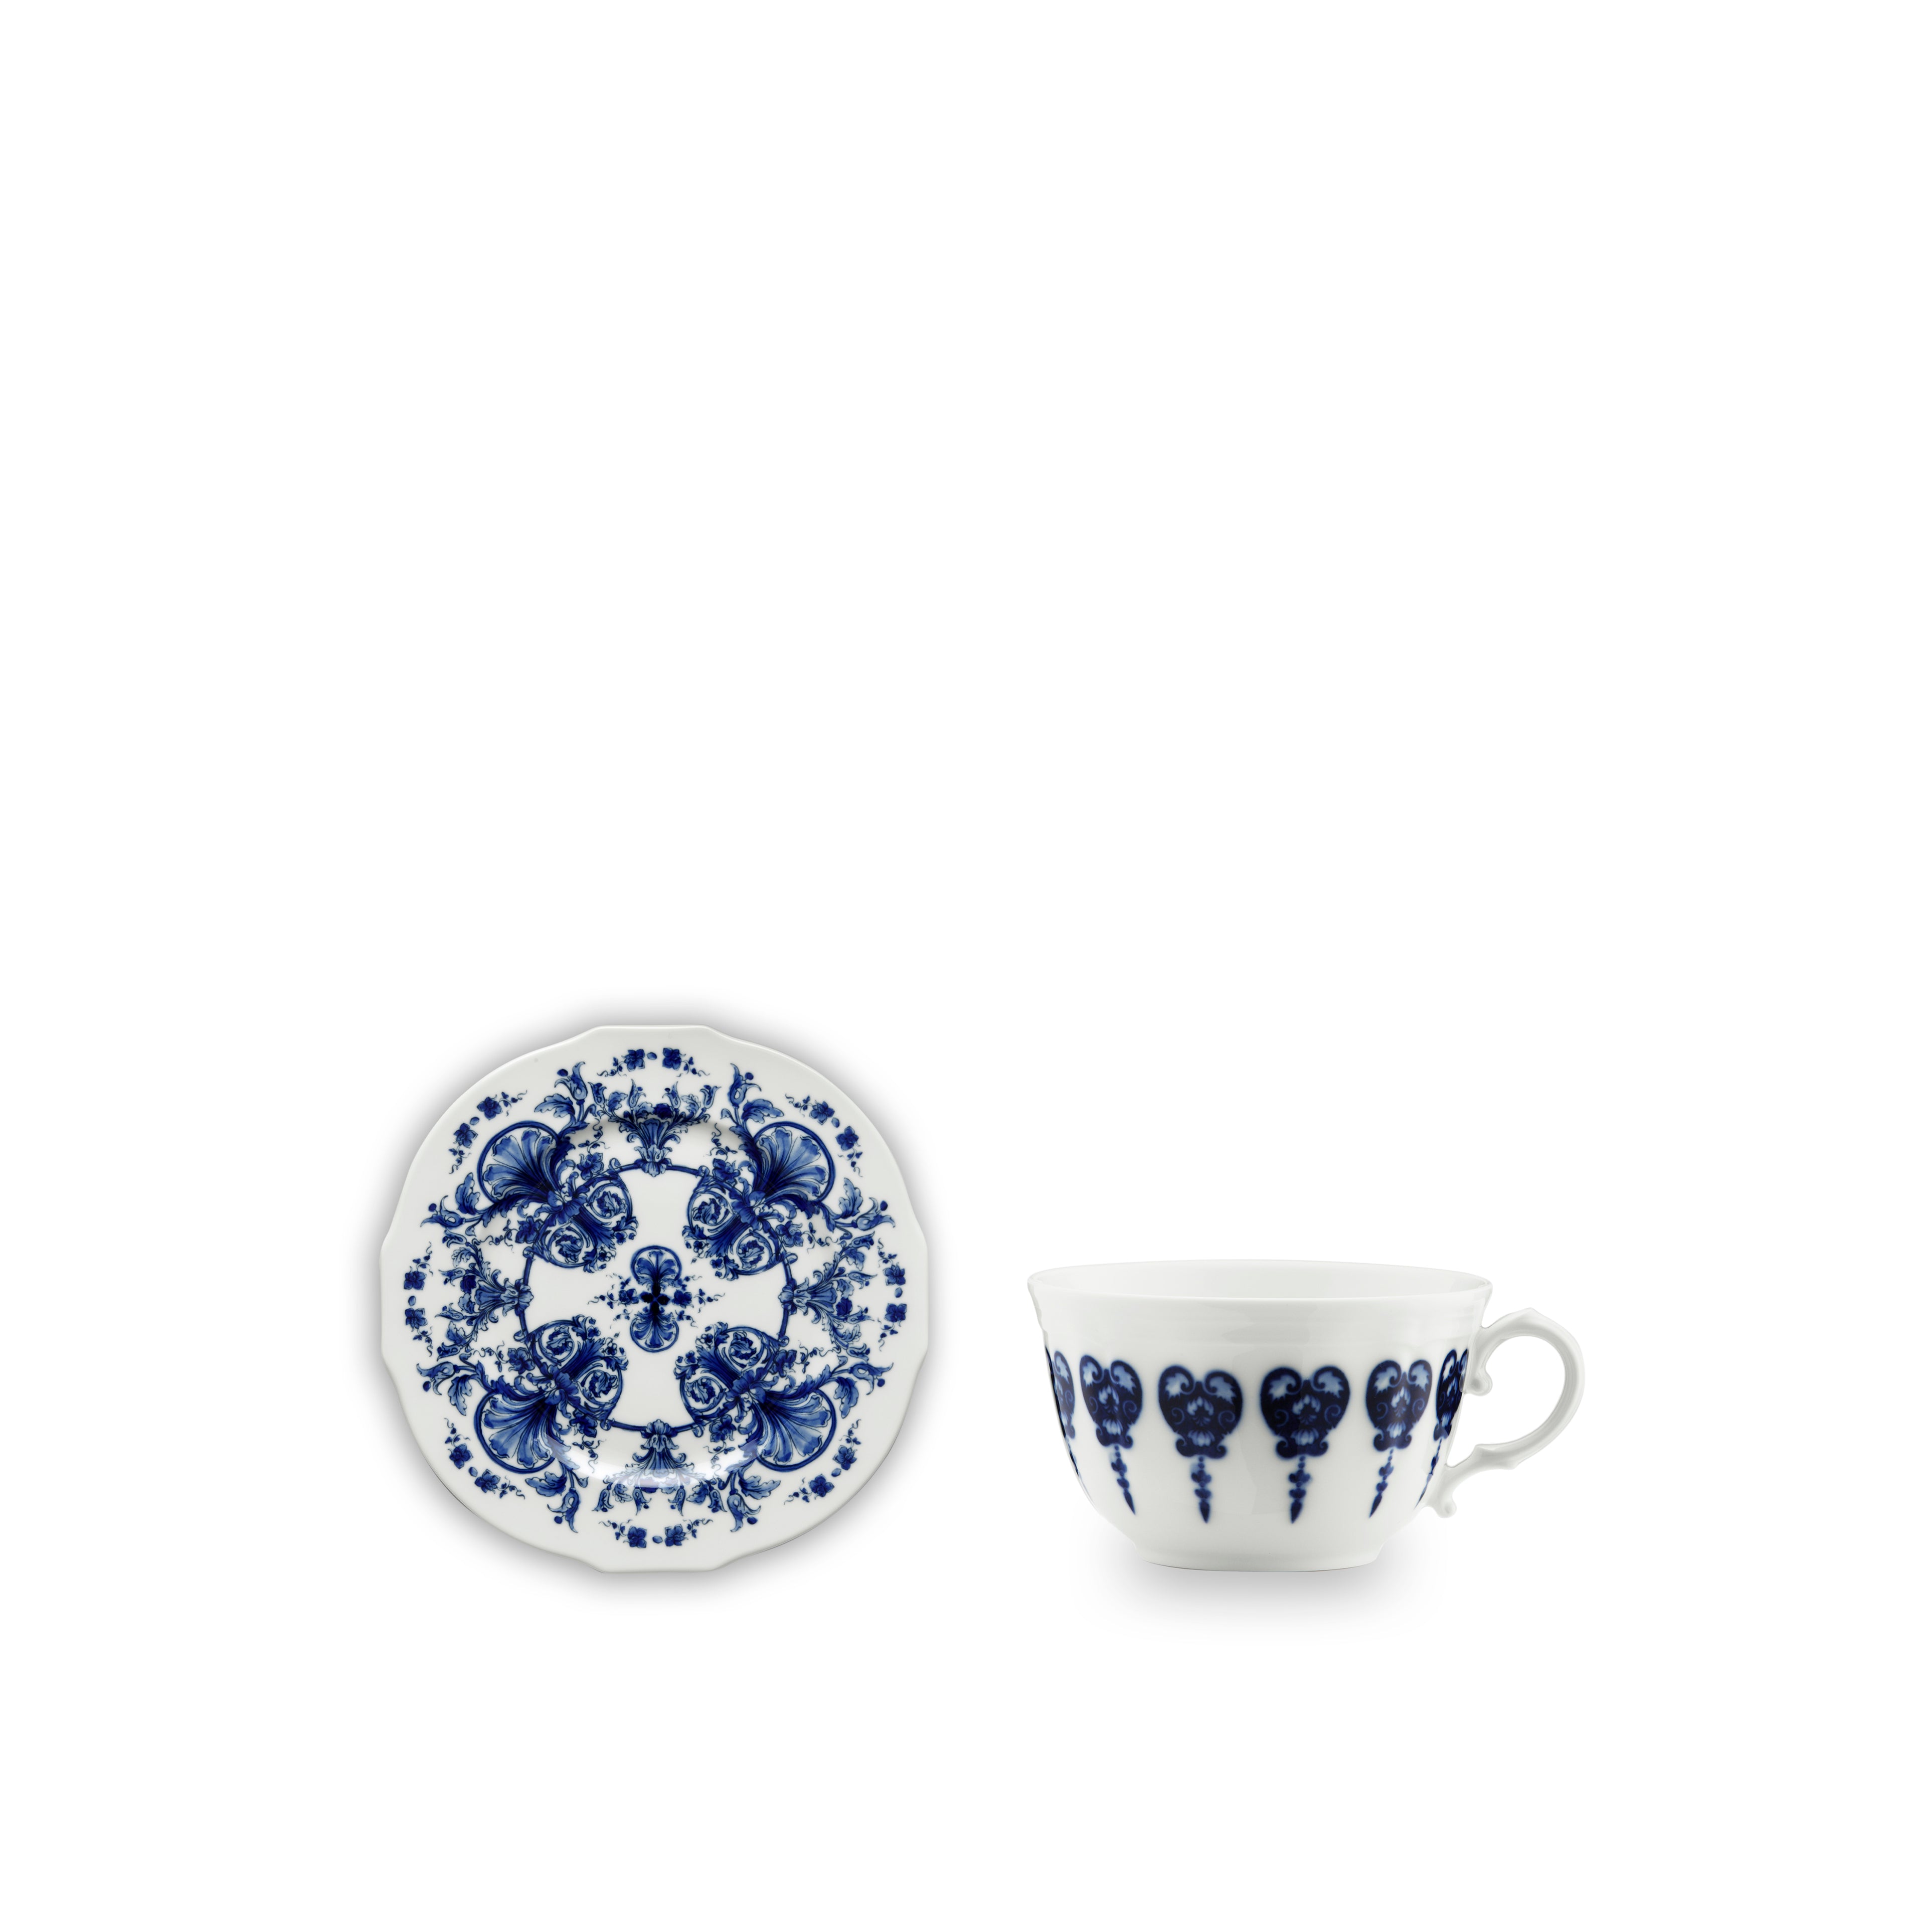 Antico Doccia Tea Cup & Saucer in Babele Blu, 9.5cm